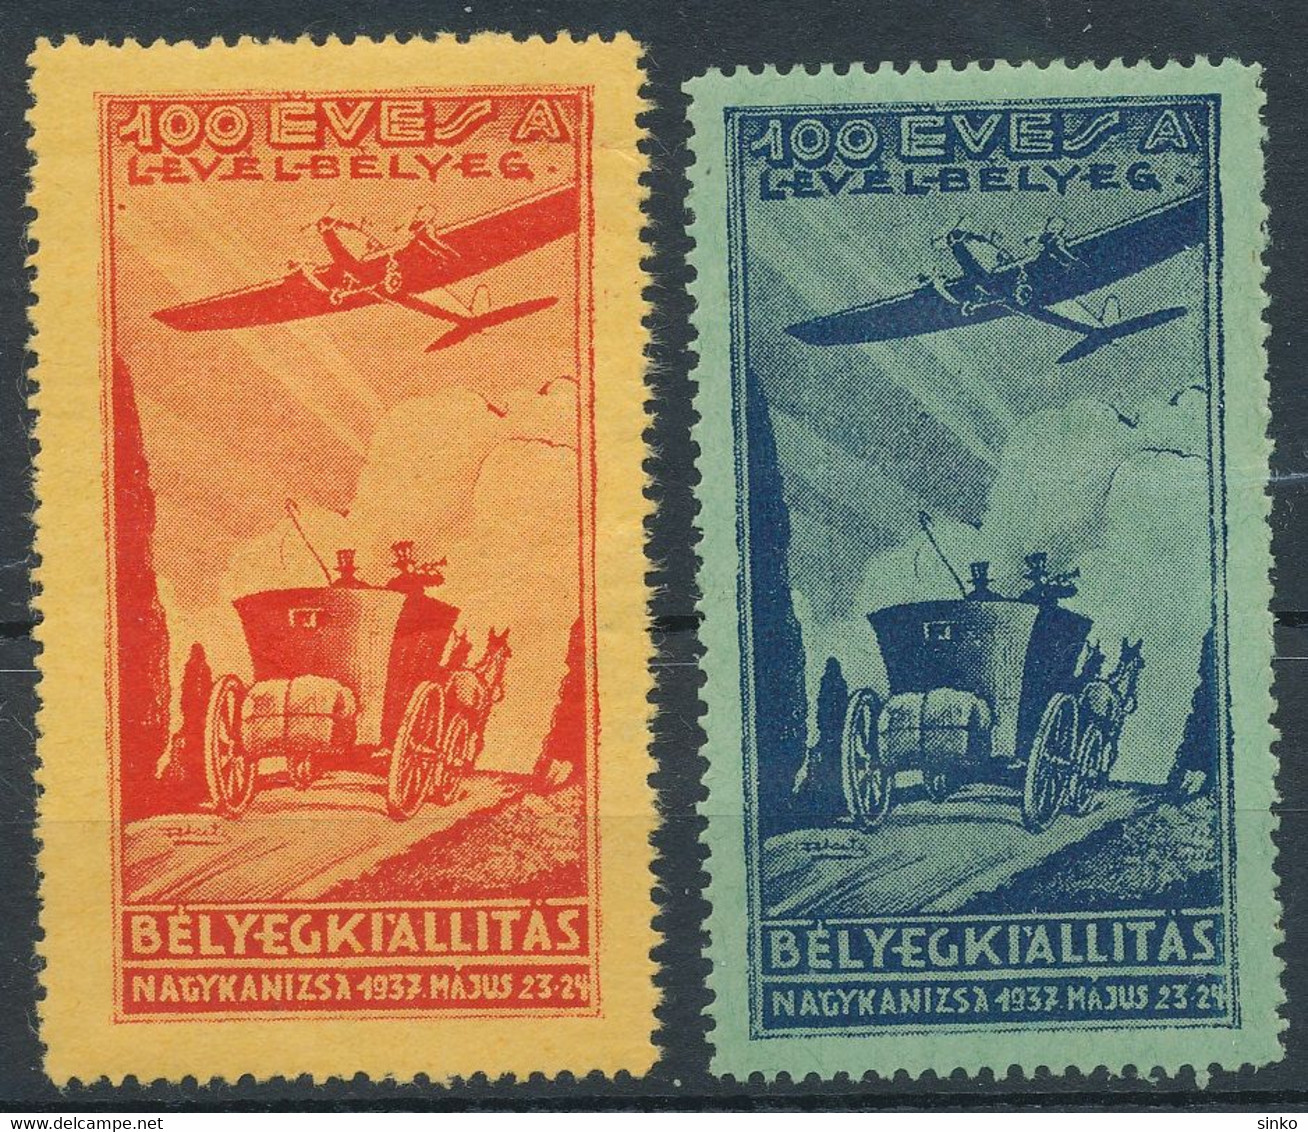 1937. First Stamp Exhibition In Nagykanizsa - Commemorative Sheet - Foglietto Ricordo